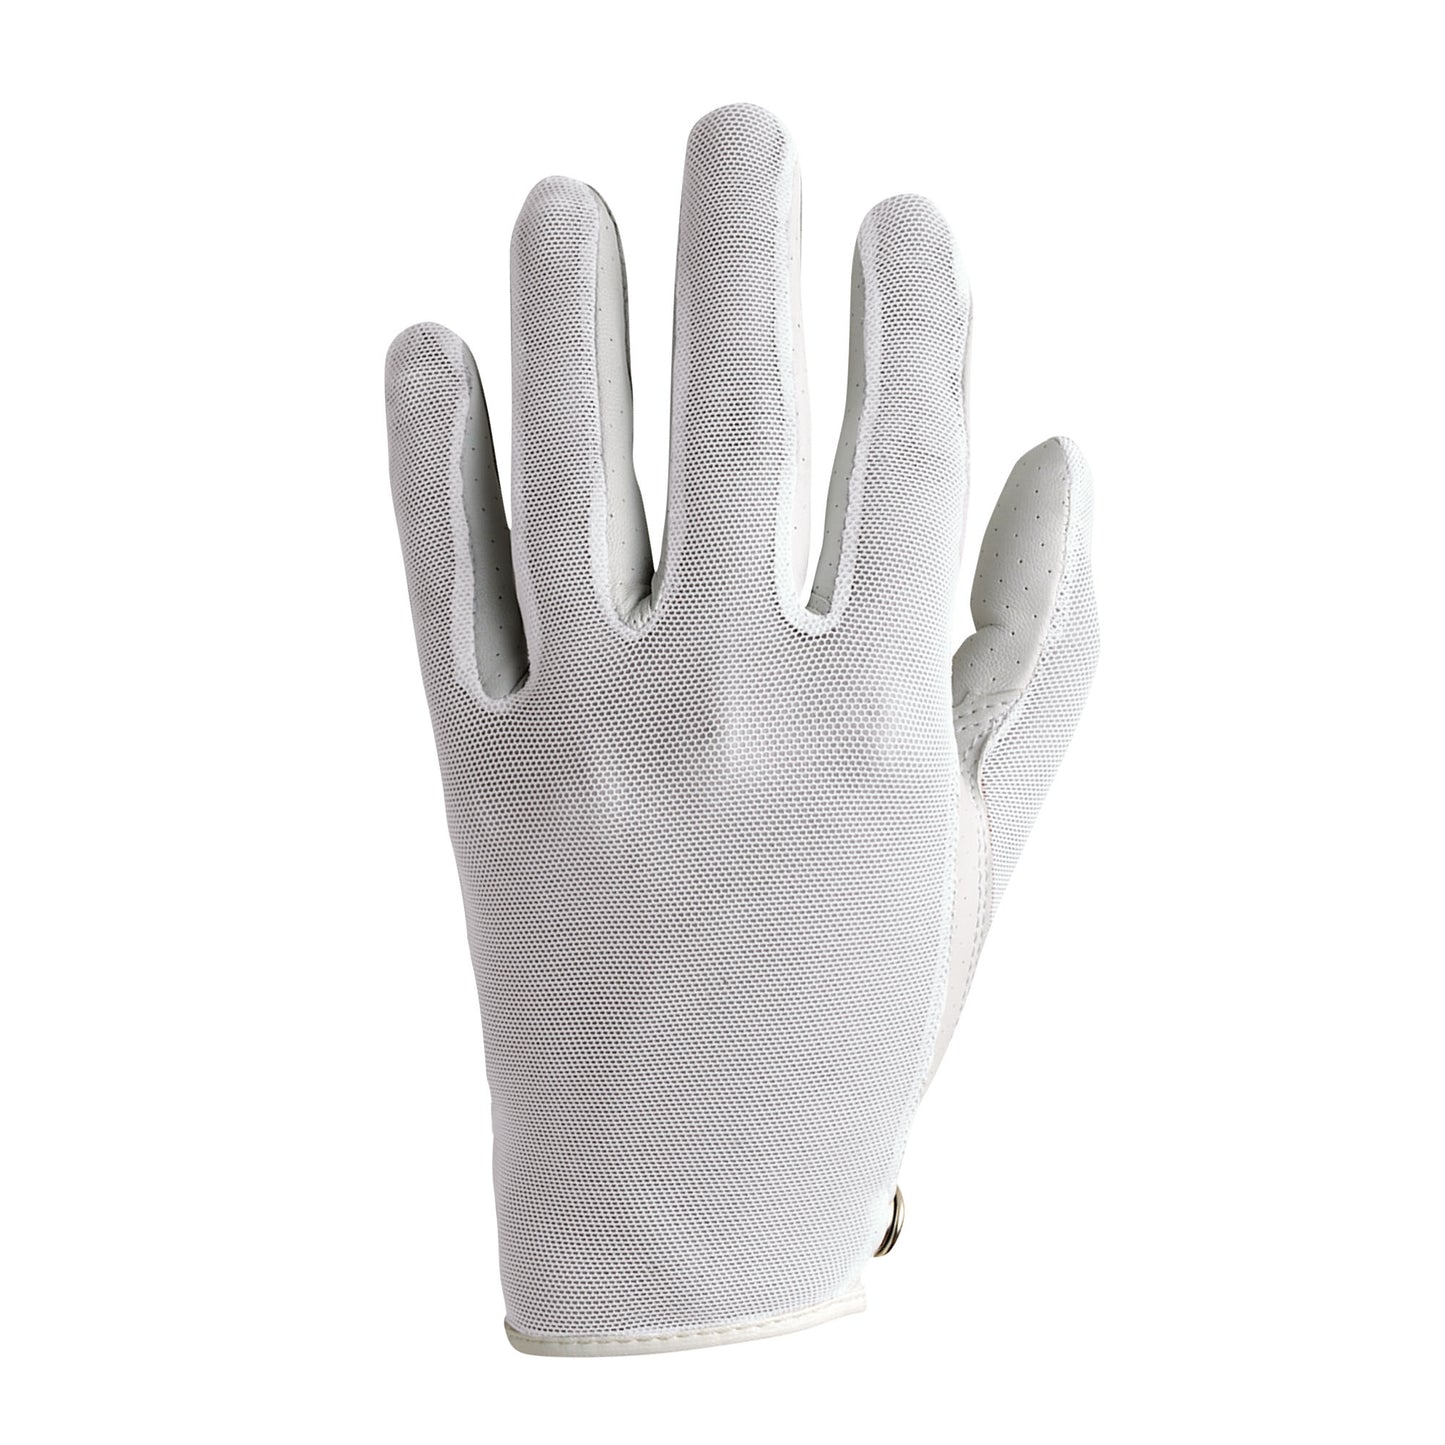 FootJoy Ladies Mesh StaCooler Golf Glove in White Fashion